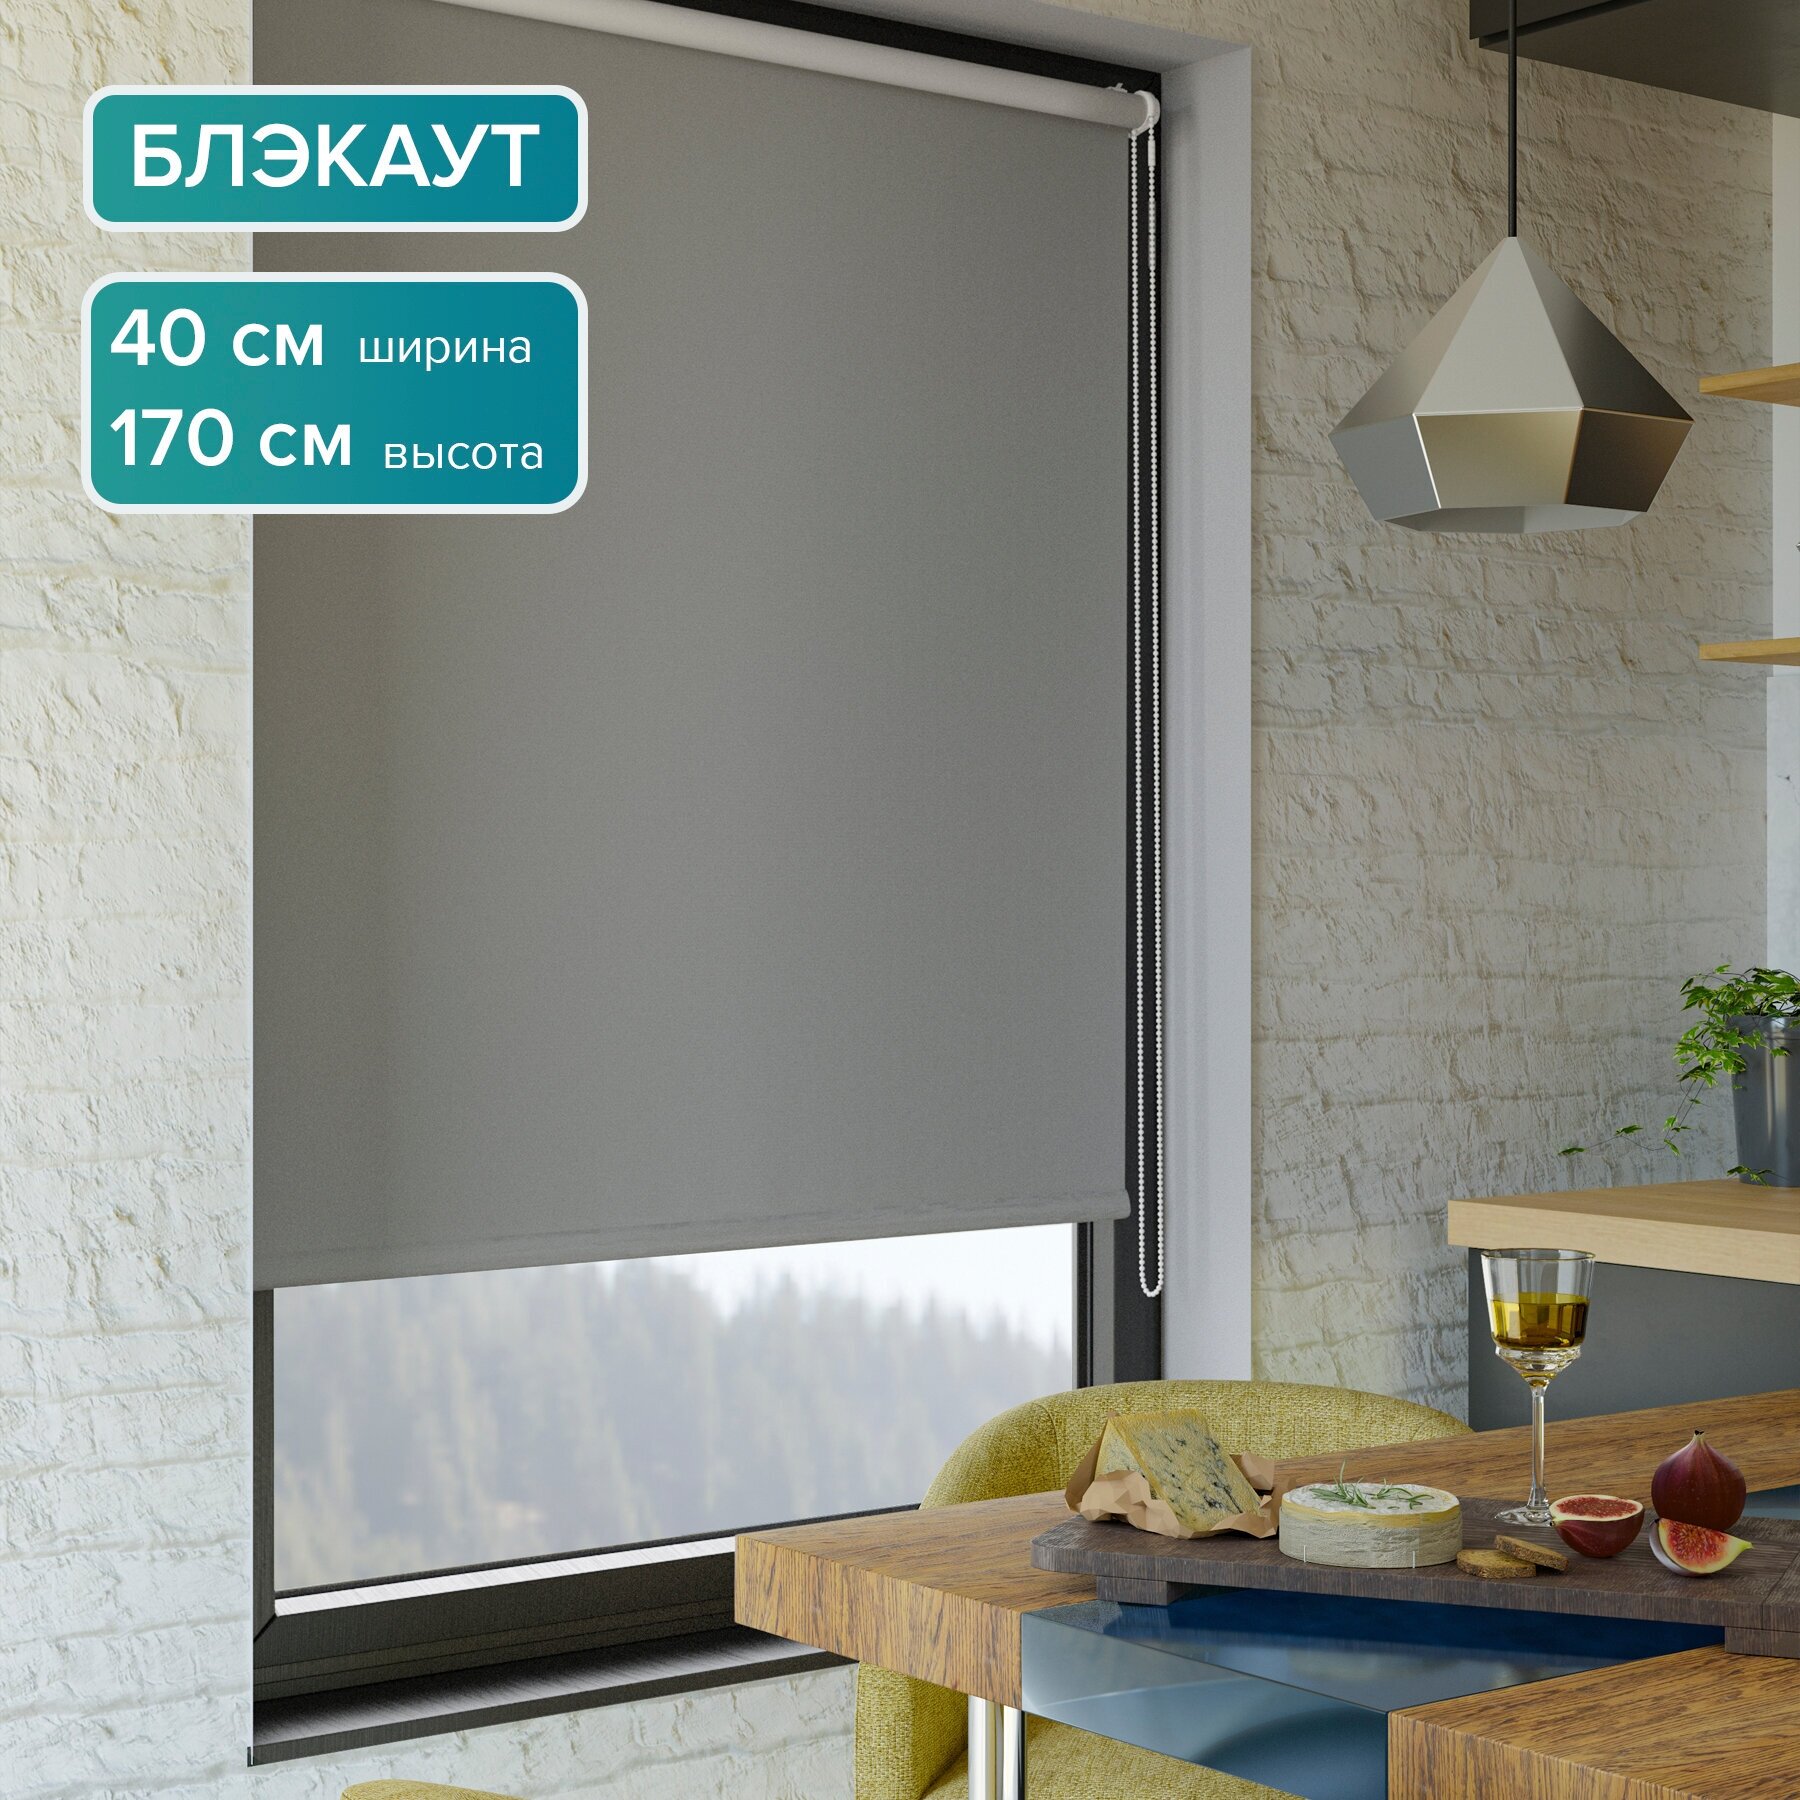 Рулонные шторы PIKAMO светонепроницаемая 40*170 см, цвет: серый, Блэкаут / Blackout рулонные шторы для комнаты для кухни для спальни